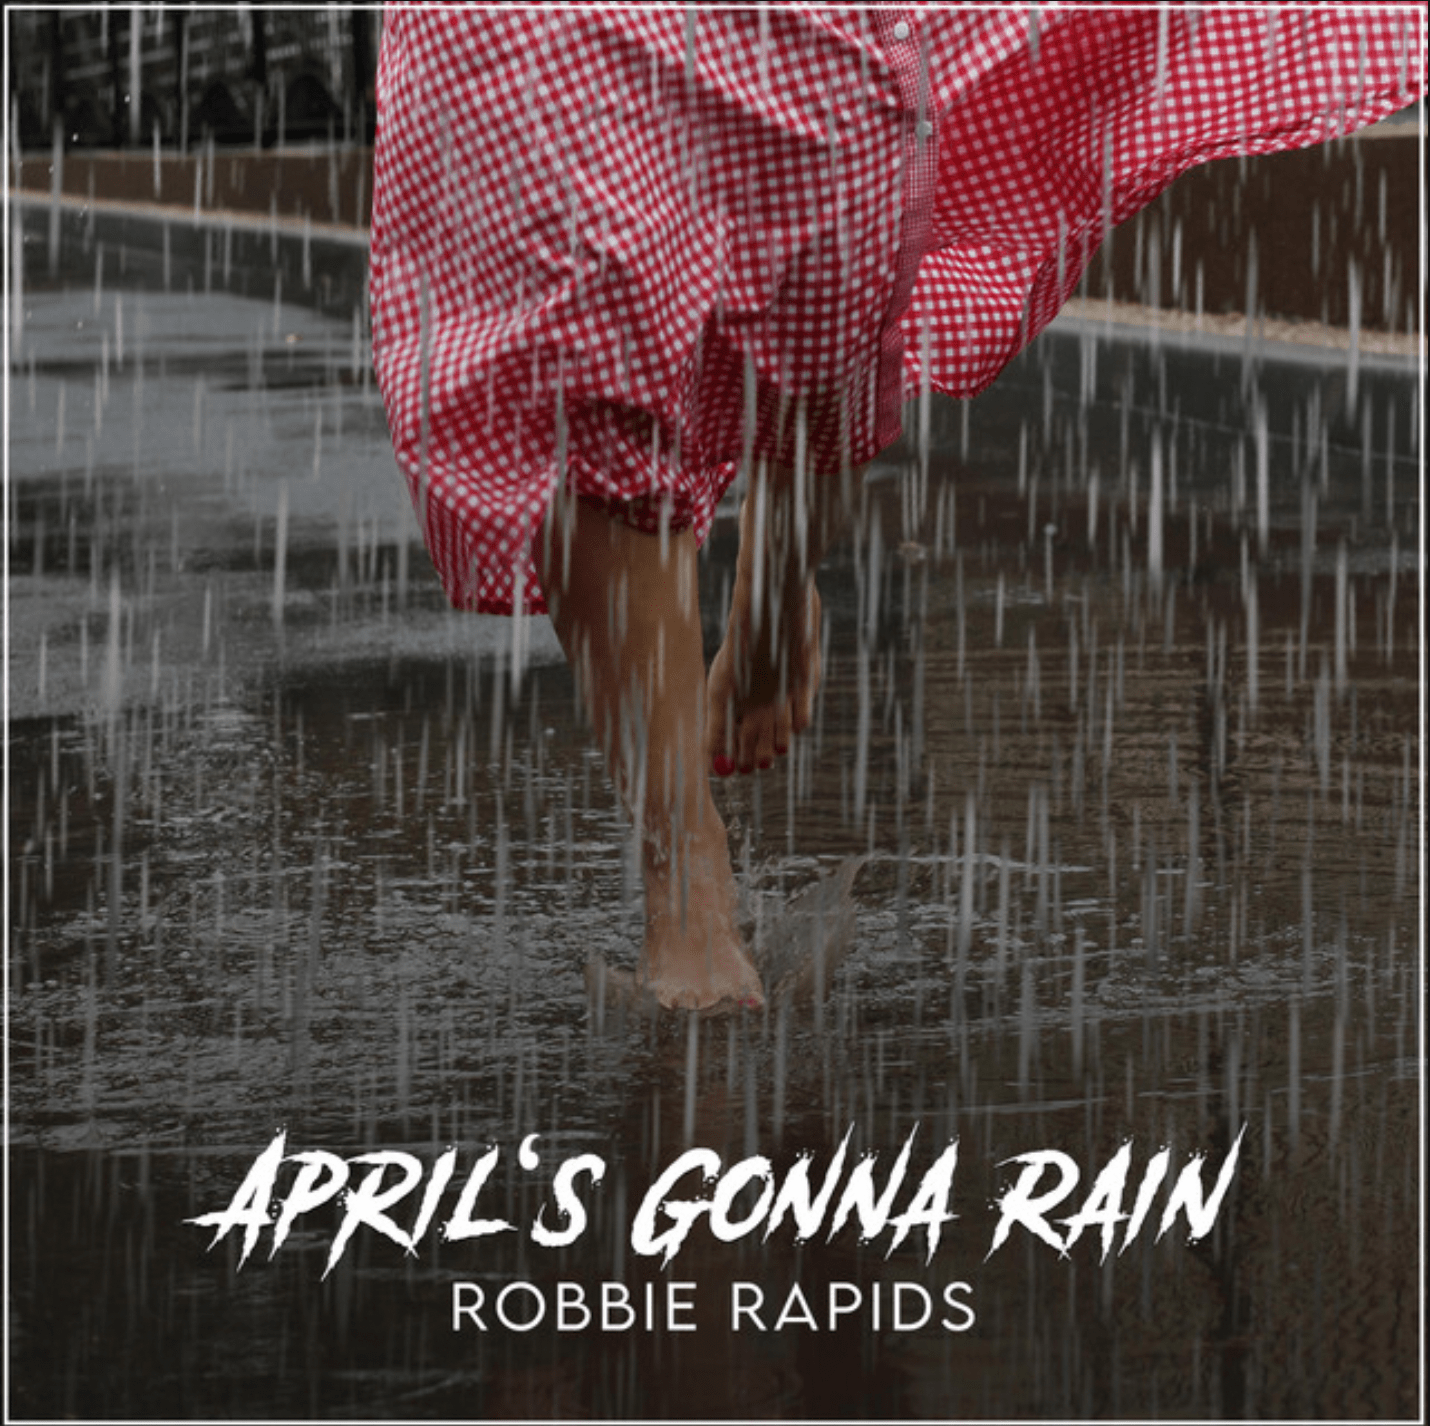 April's Gonna Rain (Original Single) by Robbie Rapids